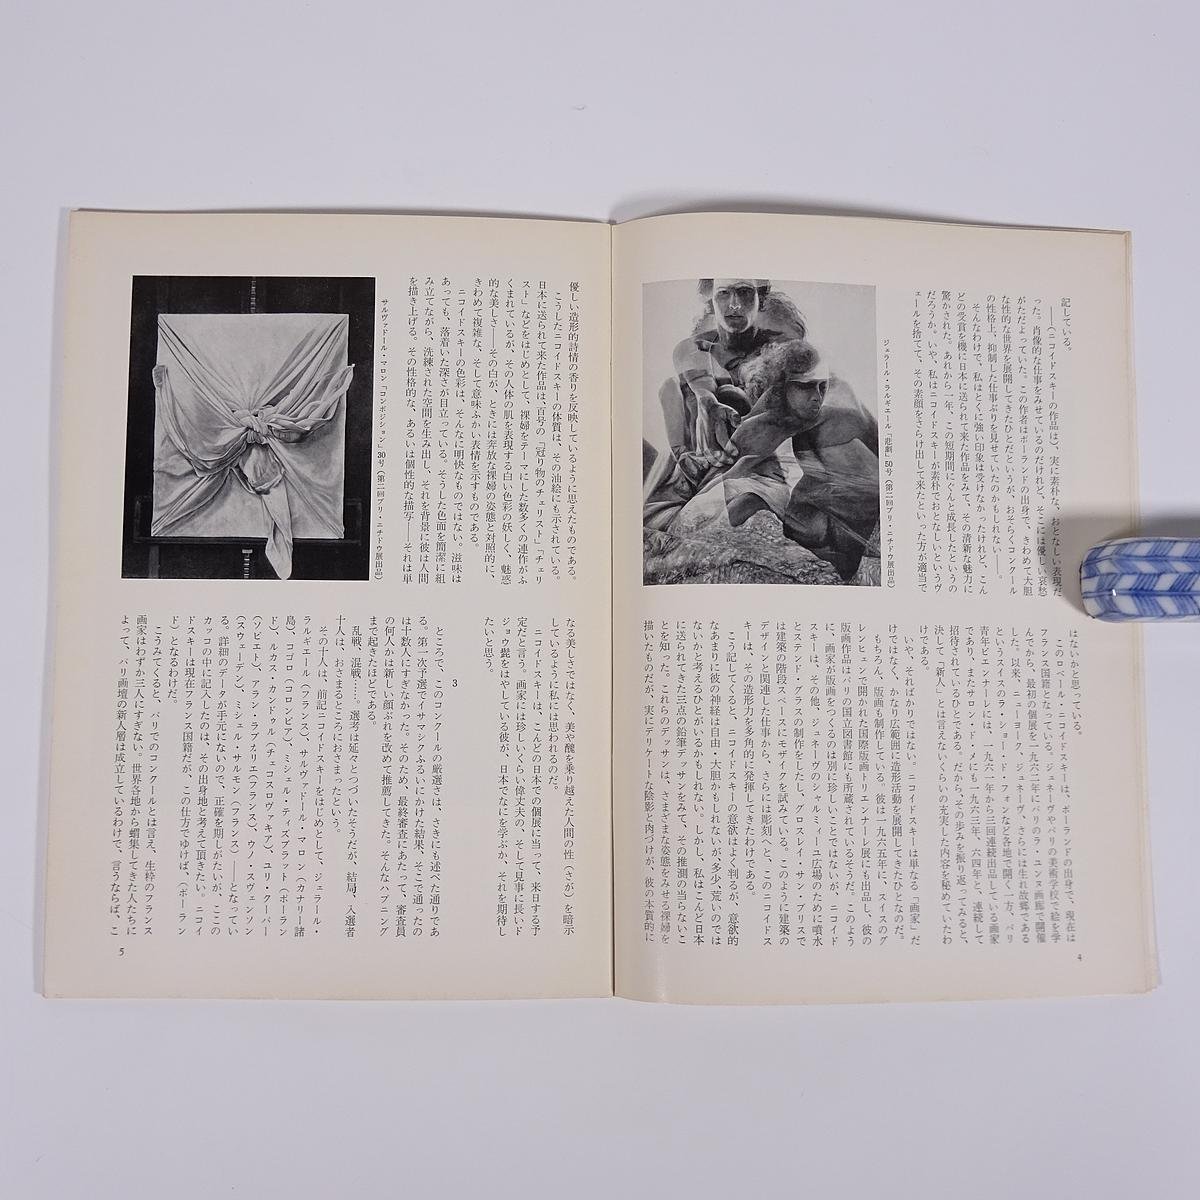  monthly magazine ..No.151 1976/9 day animation . small booklet art fine art picture special collection * Nico ido ski .[pli*nichidou exhibition ]e milio * Greco another 